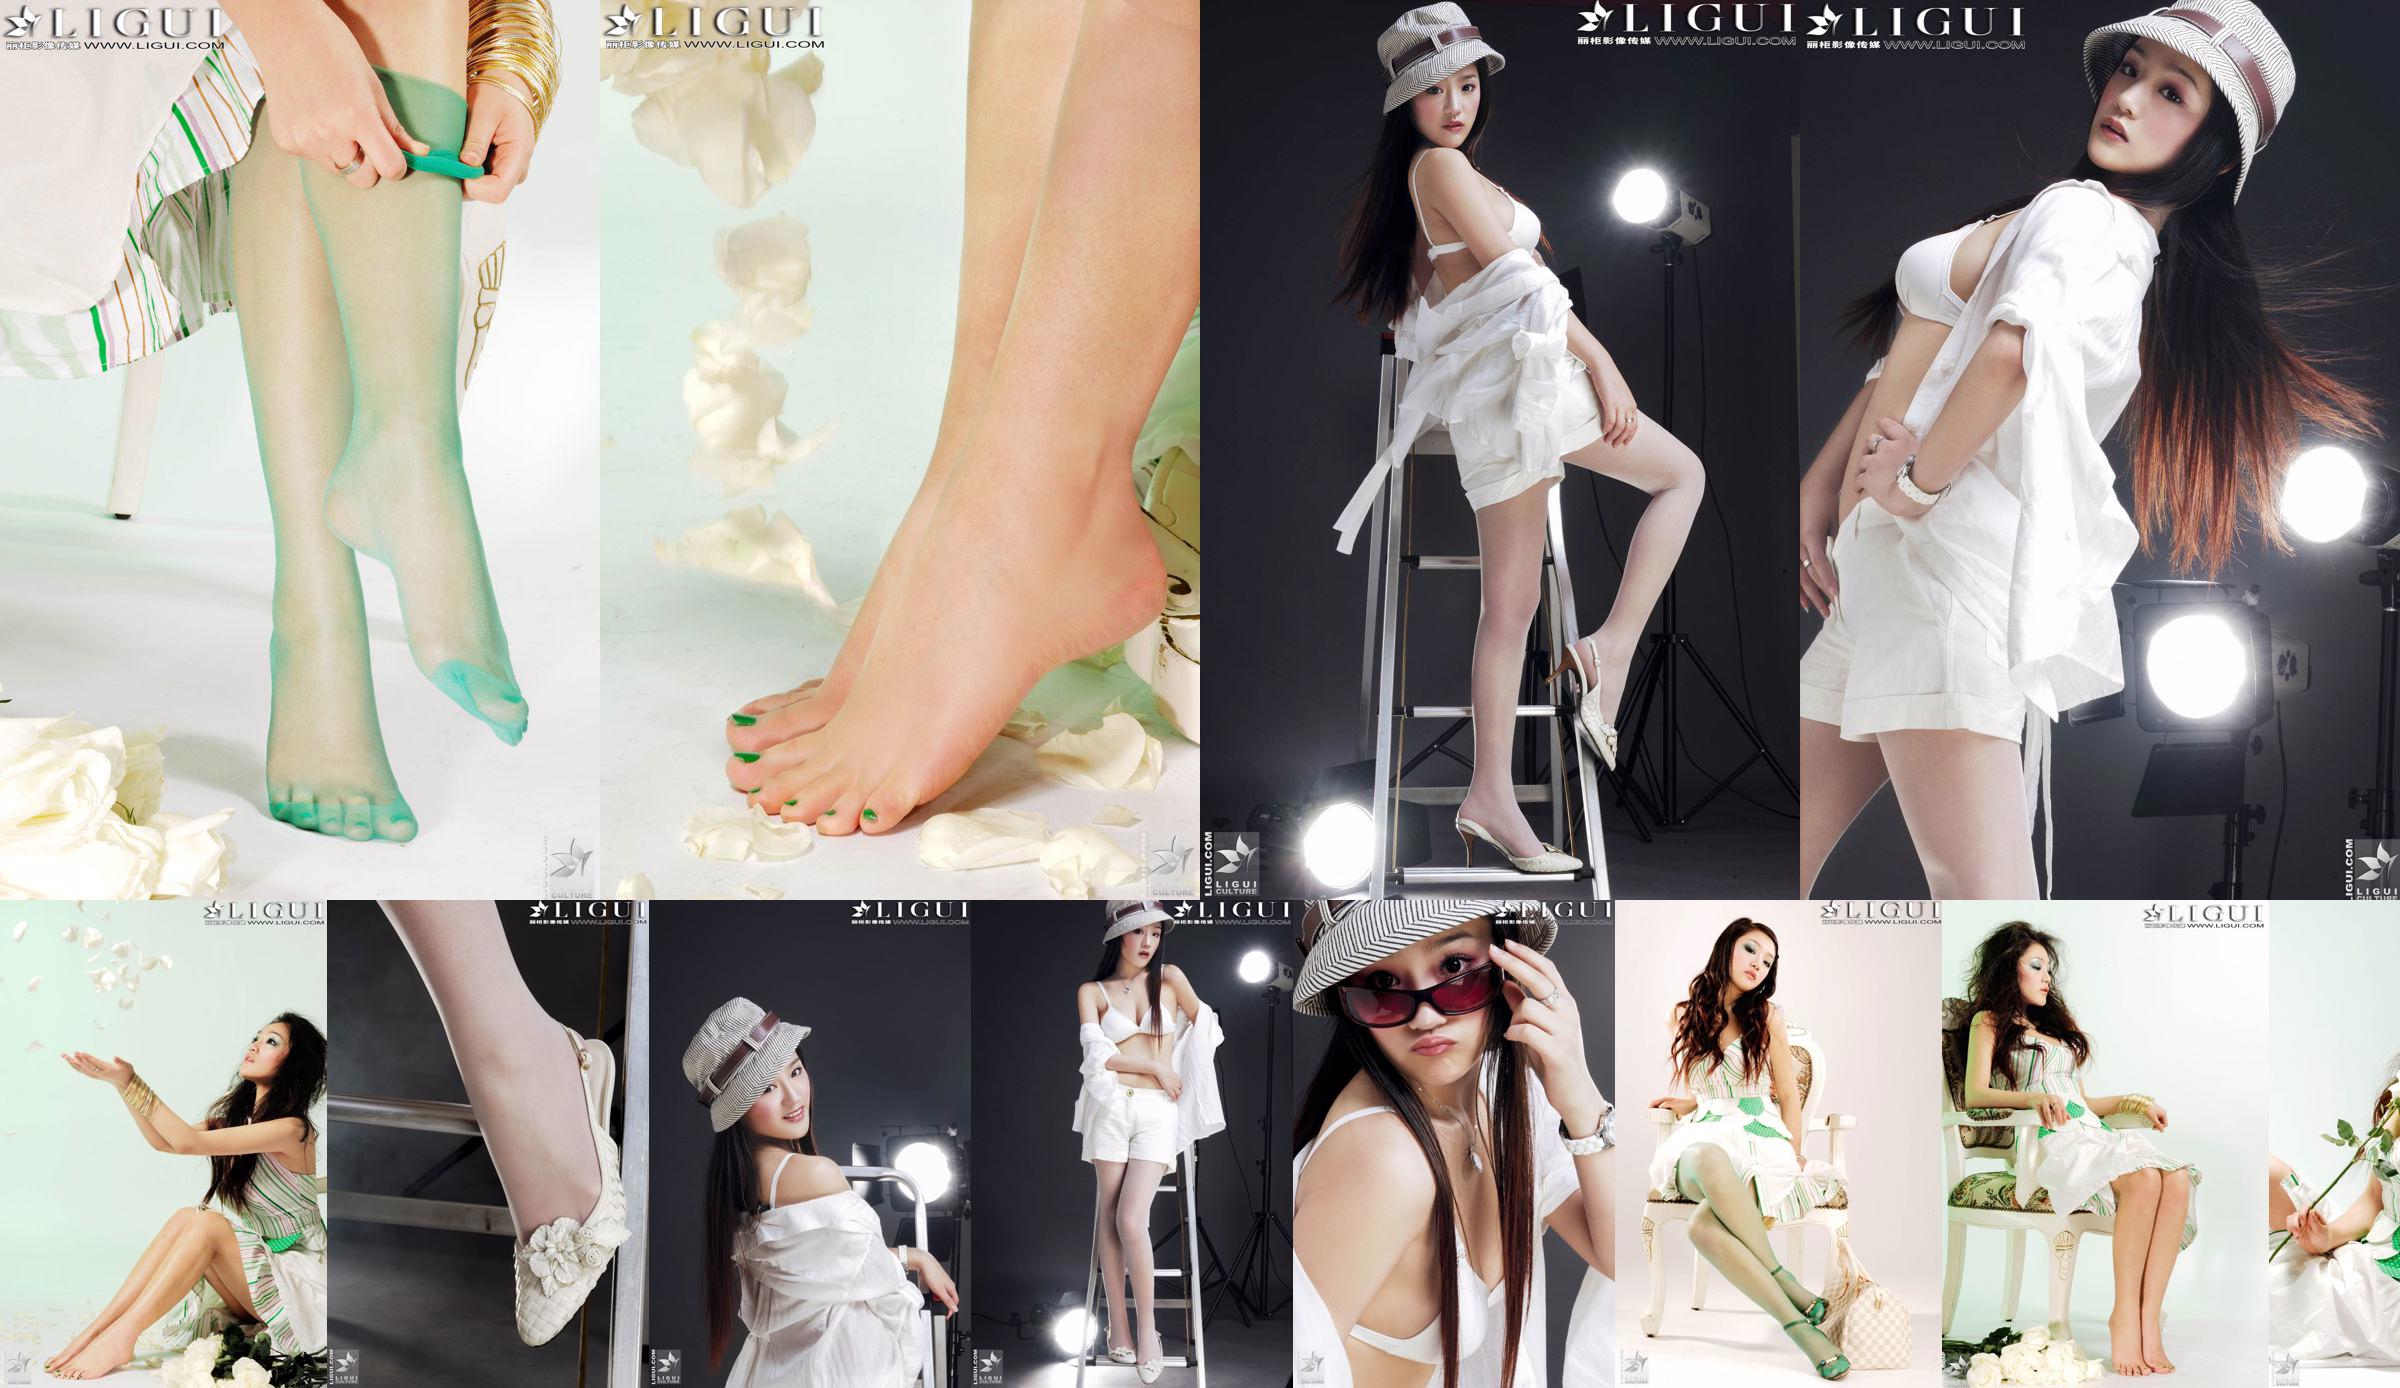 [丽 柜 贵 foot LiGui] Bức ảnh "Chân thời trang" của người mẫu Zhang Jingyan về đôi chân đẹp và đôi chân lụa No.894761 Trang 1